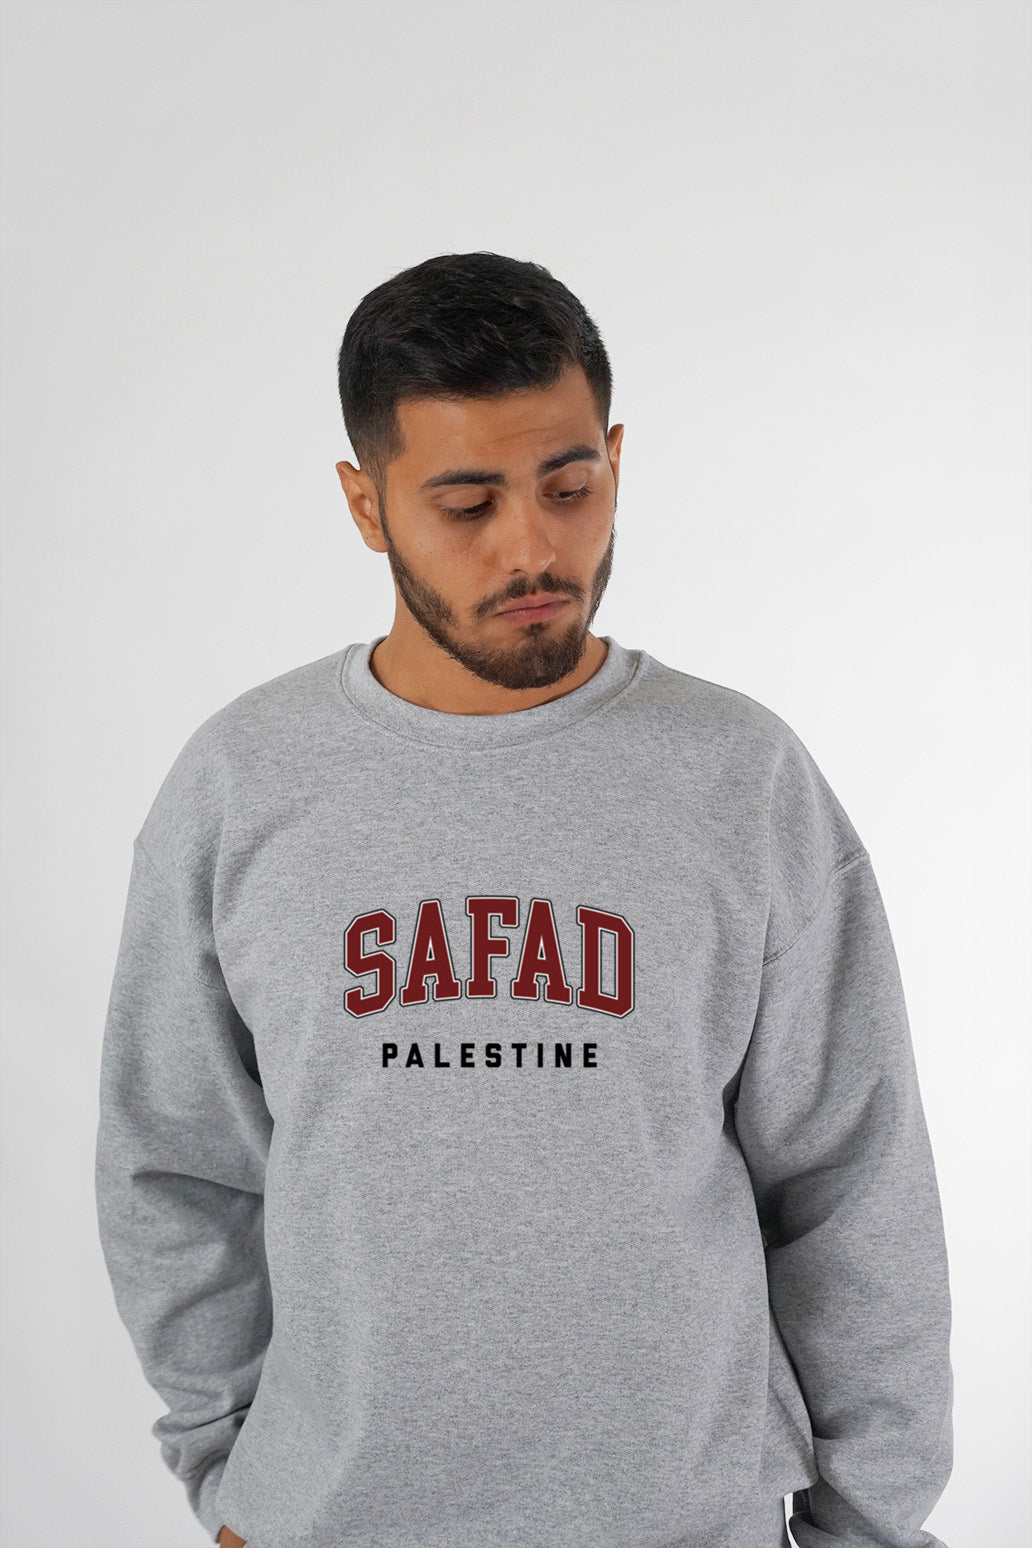 Safad, Palestine - Sweatshirt